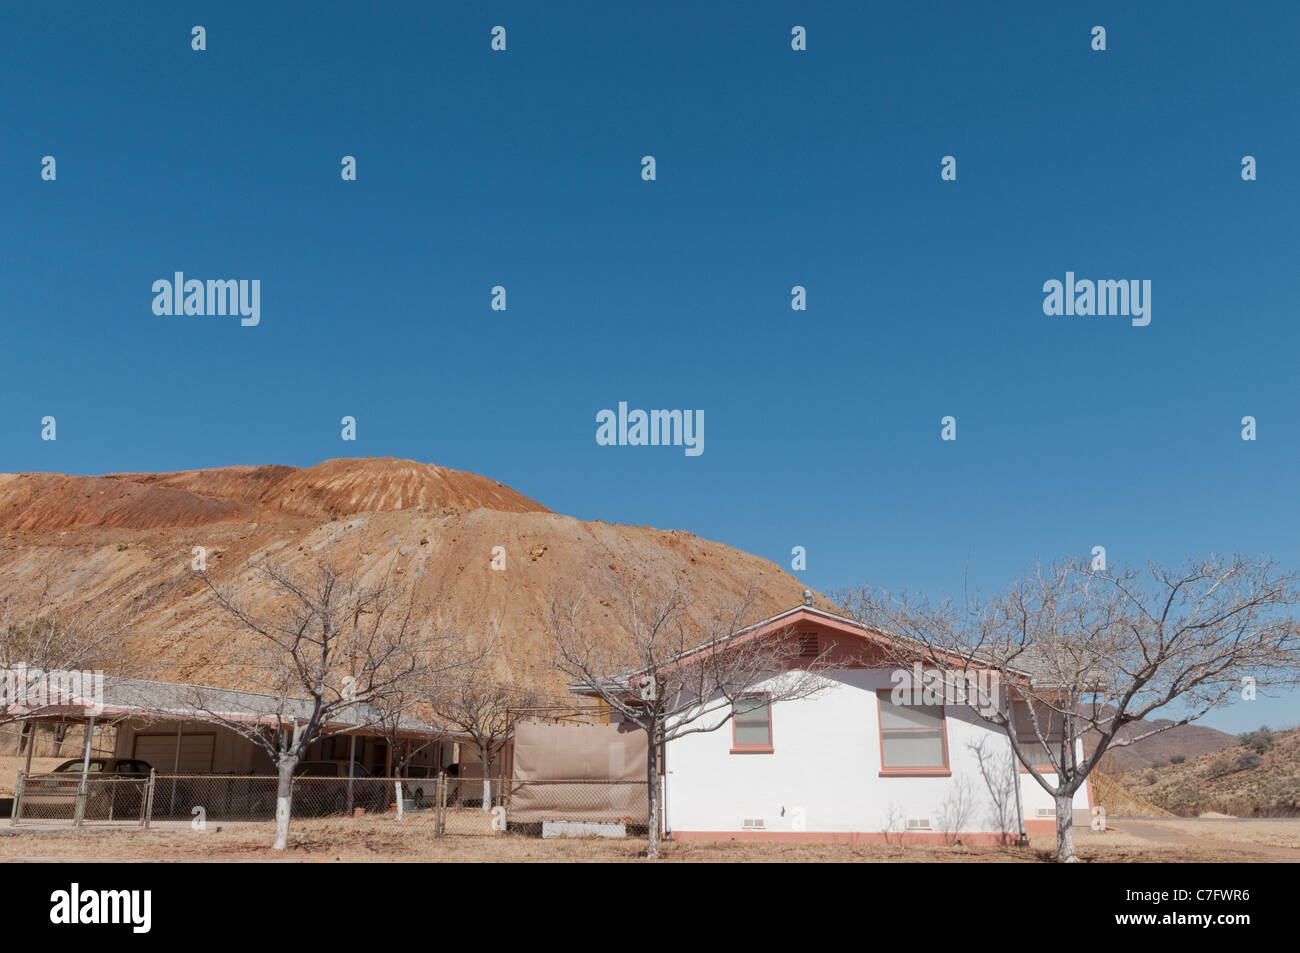 House in front of copper mine waste dump, Bisbee, Arizona, USA. Stock Photo